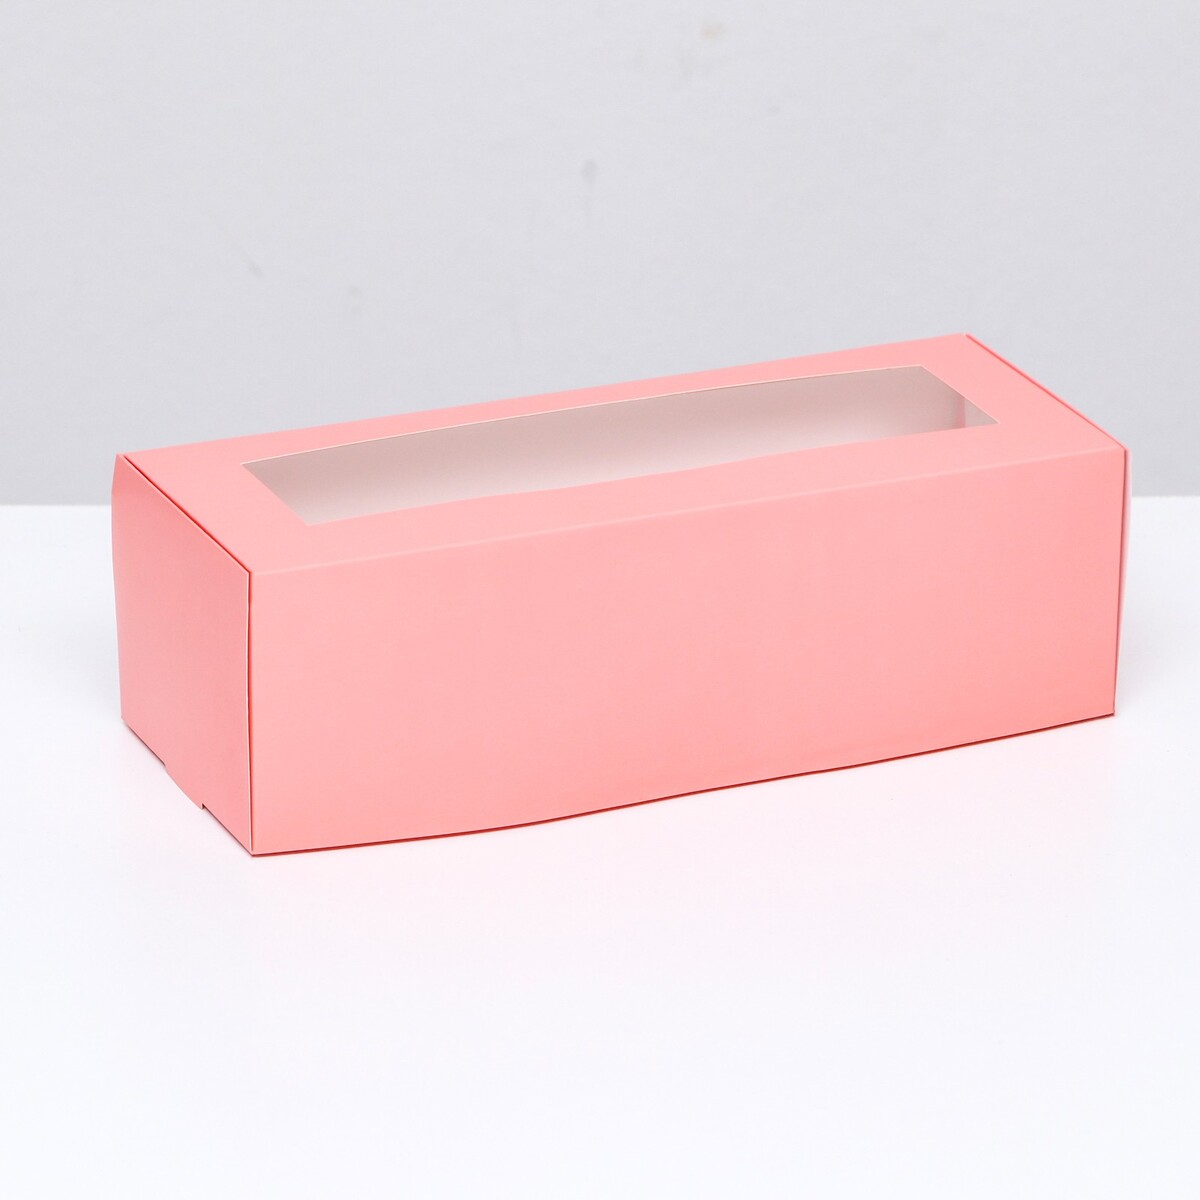 Коробка складная с окном под рулет, розовая, 26 х 10 х 8 см коробка самосборная с окном розовая 16 х 16 х 3 см